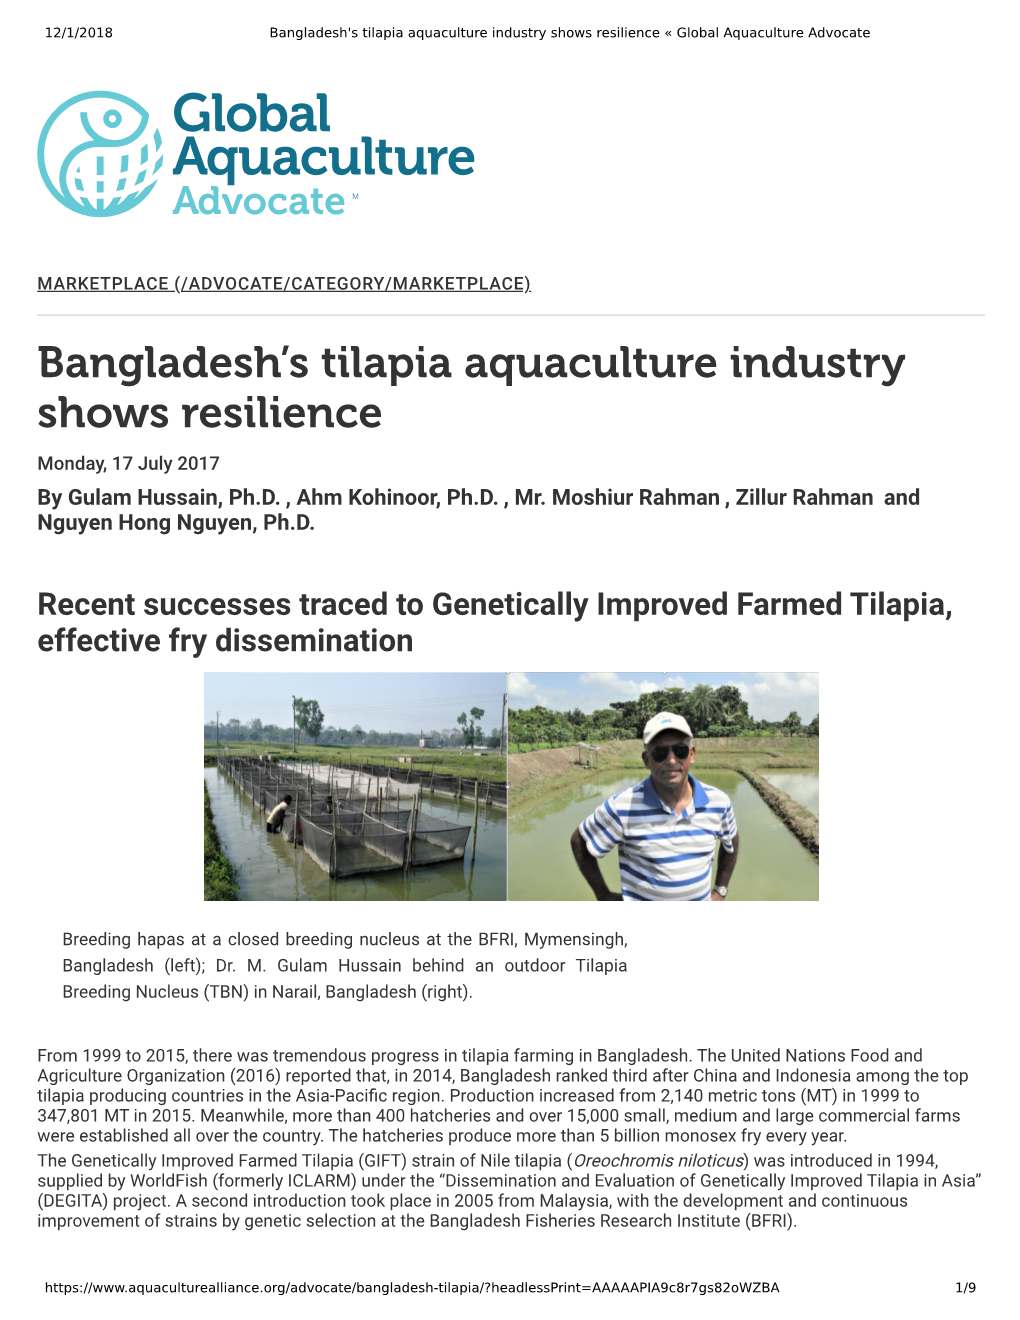 Bangladesh's Tilapia Aquaculture Industry Shows Resilience « Global Aquaculture Advocate